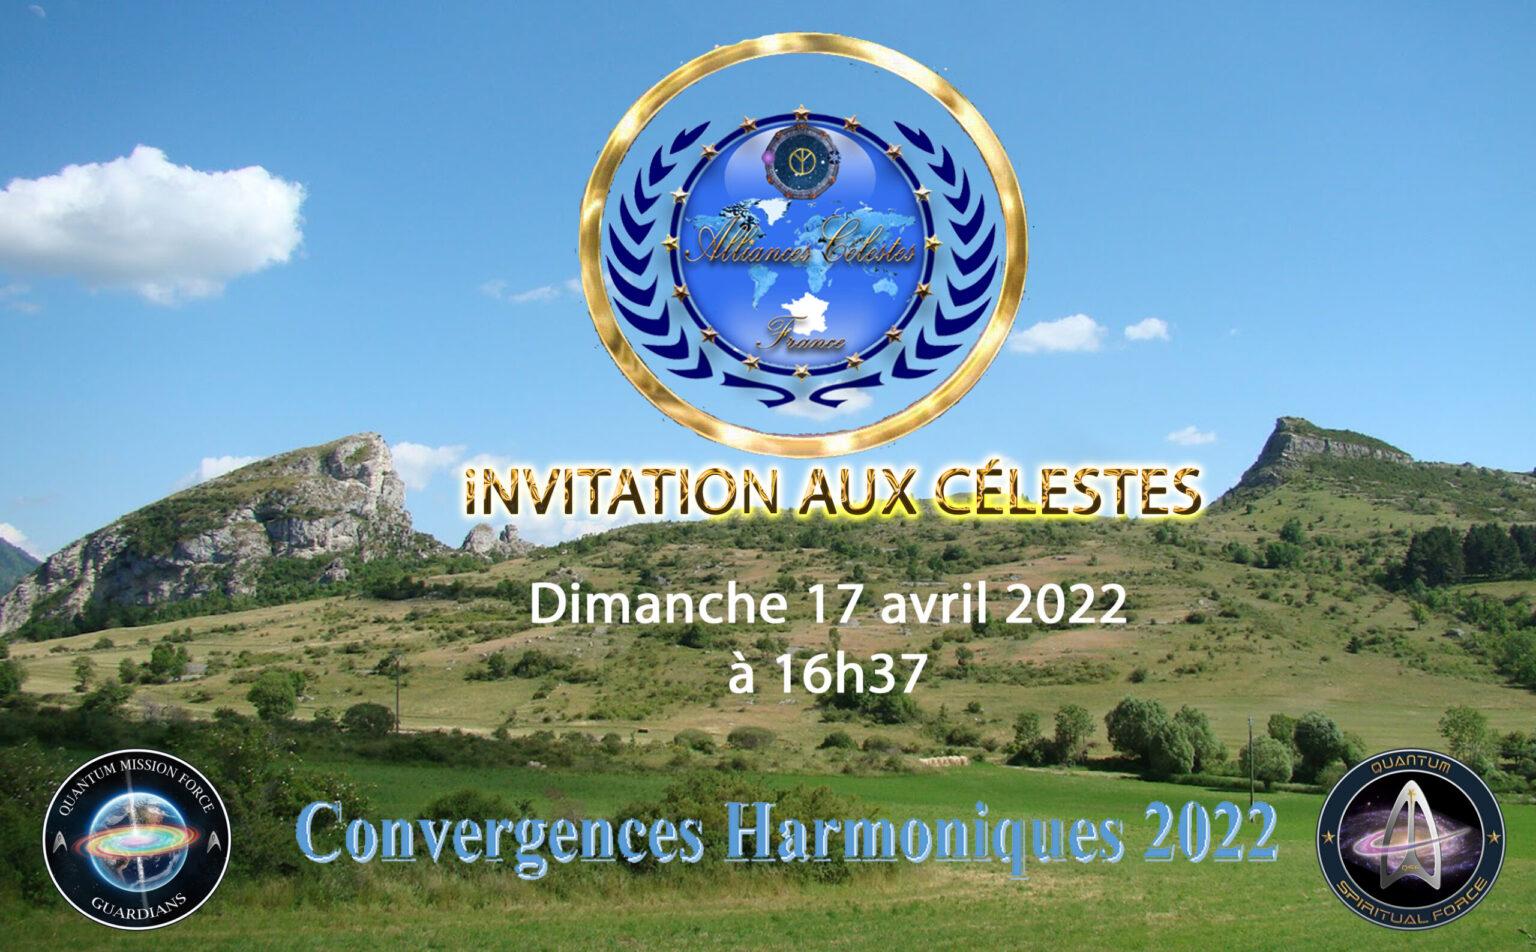 Affiche invitation aux celestes 17 avril 2022 scaled 1536x952